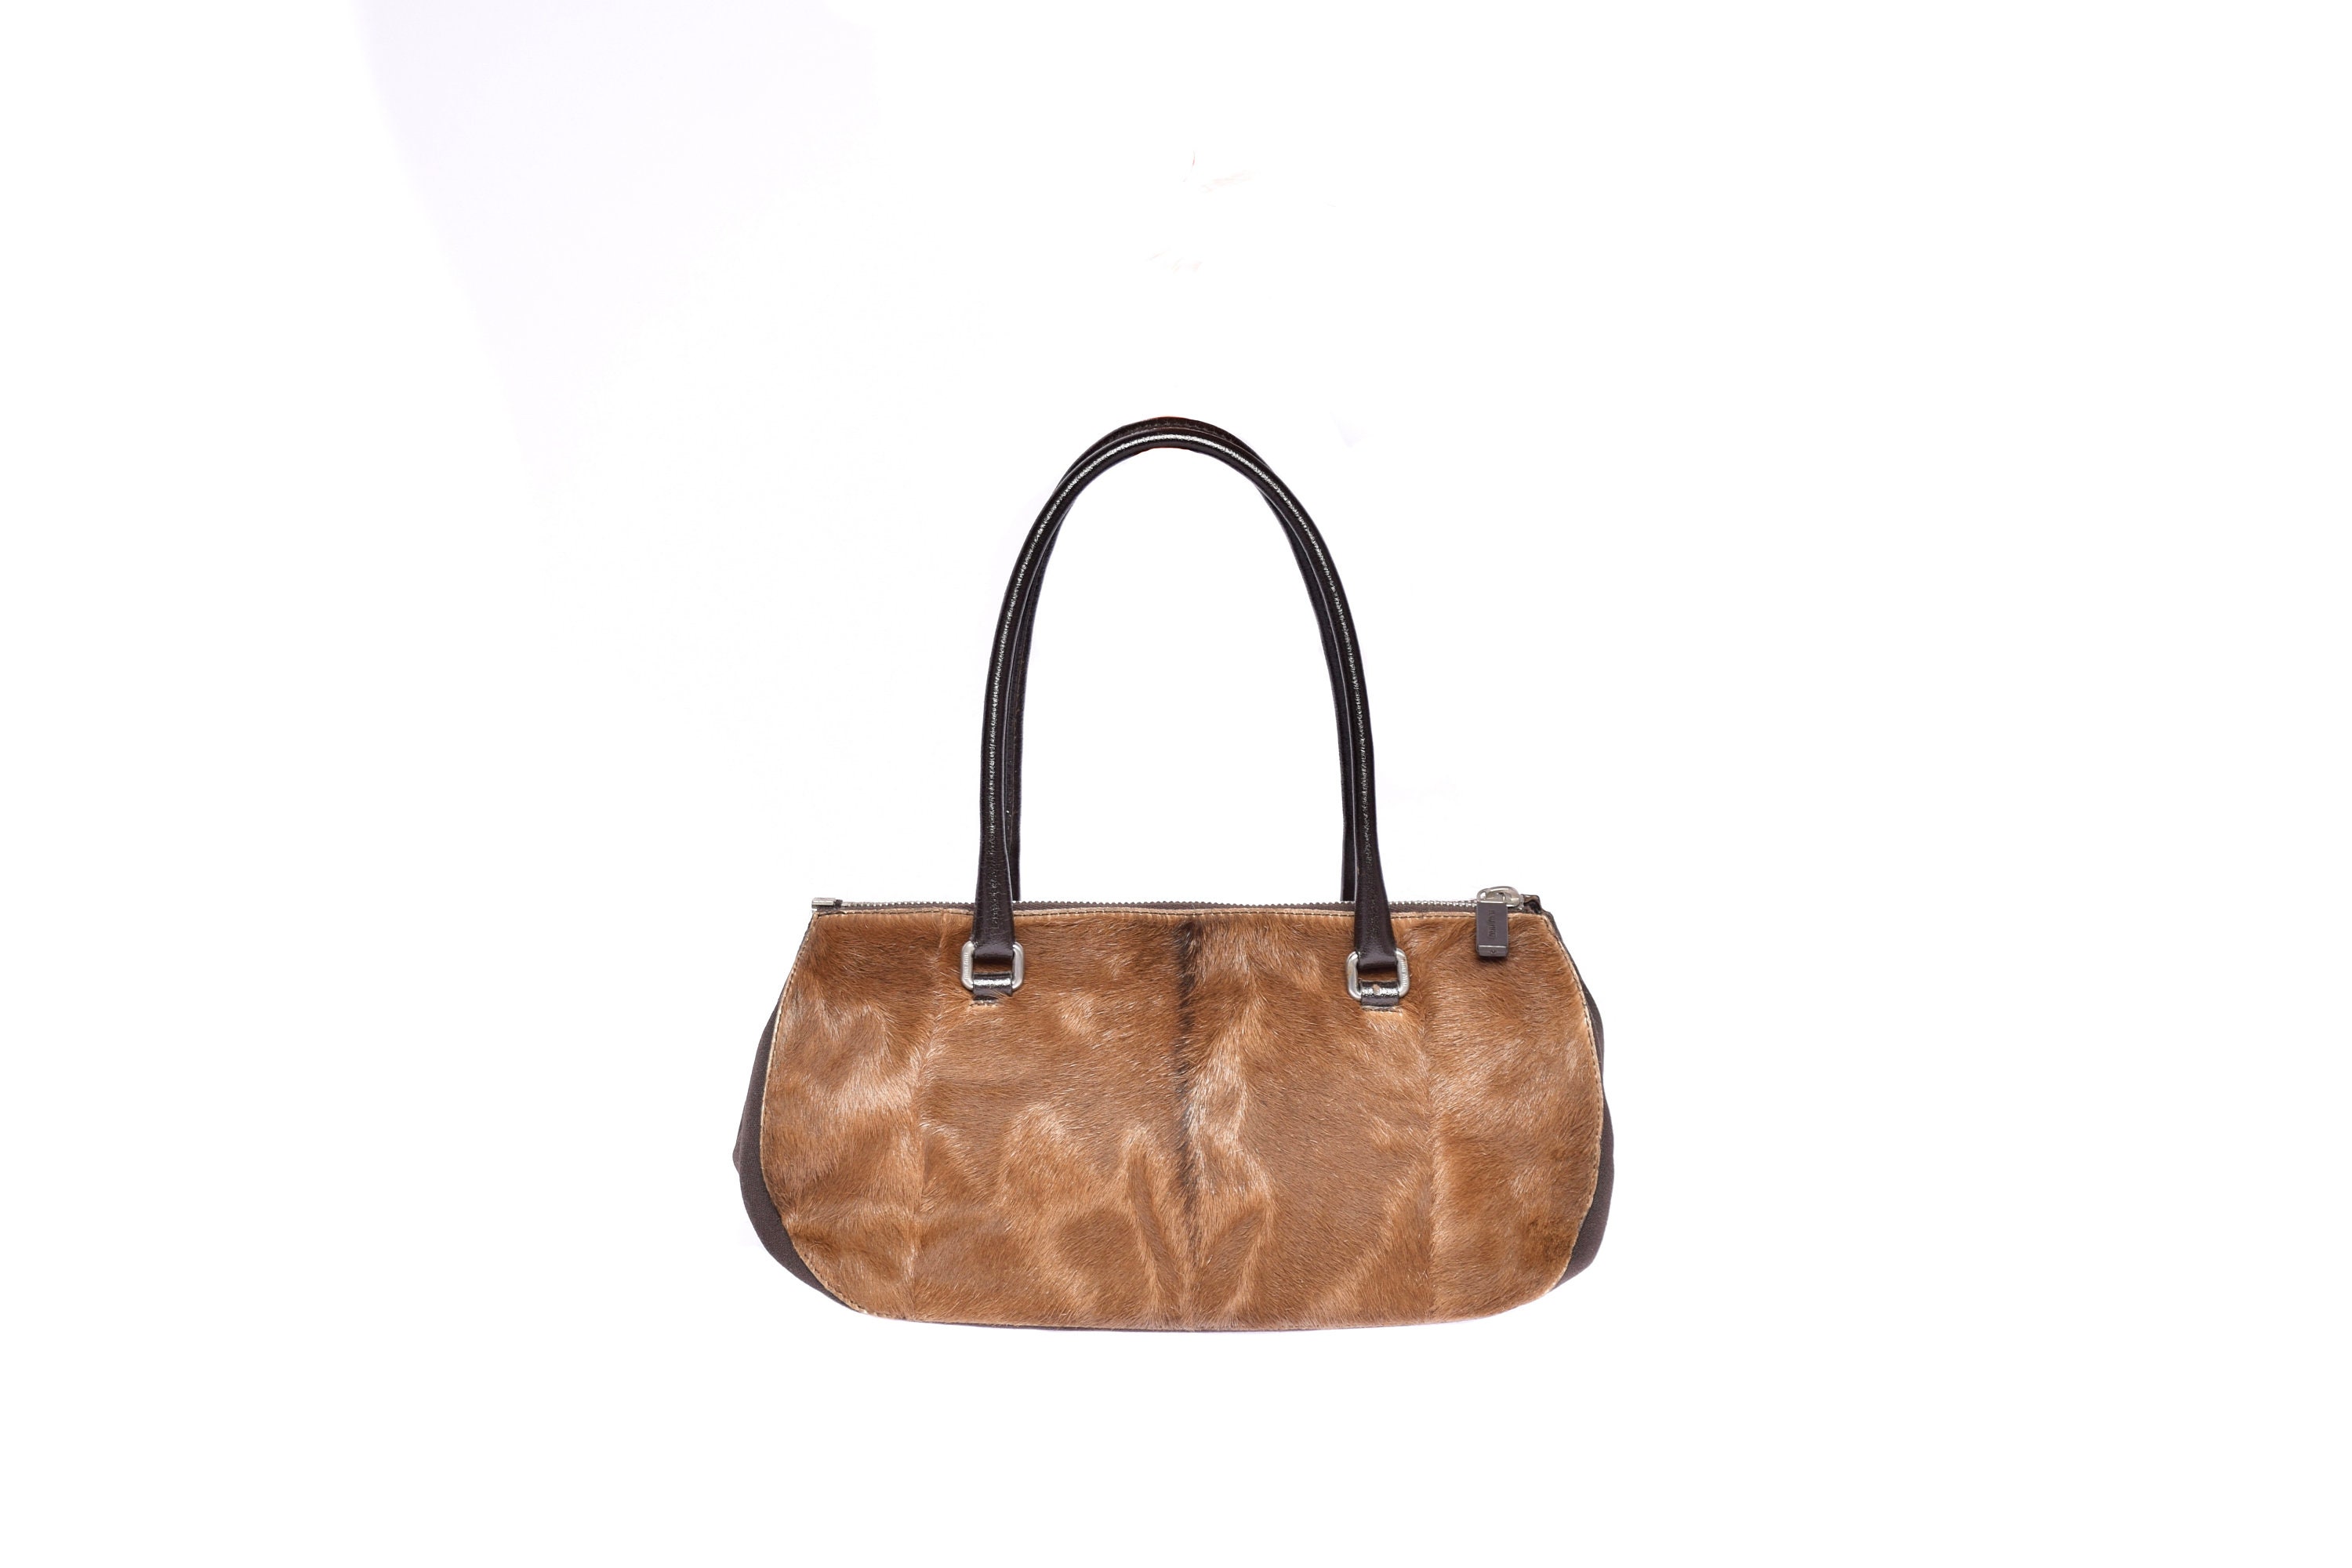 Authentic Miu Miu Bauletto Nappa Old Vintage Leather Tote Crossbody Bag